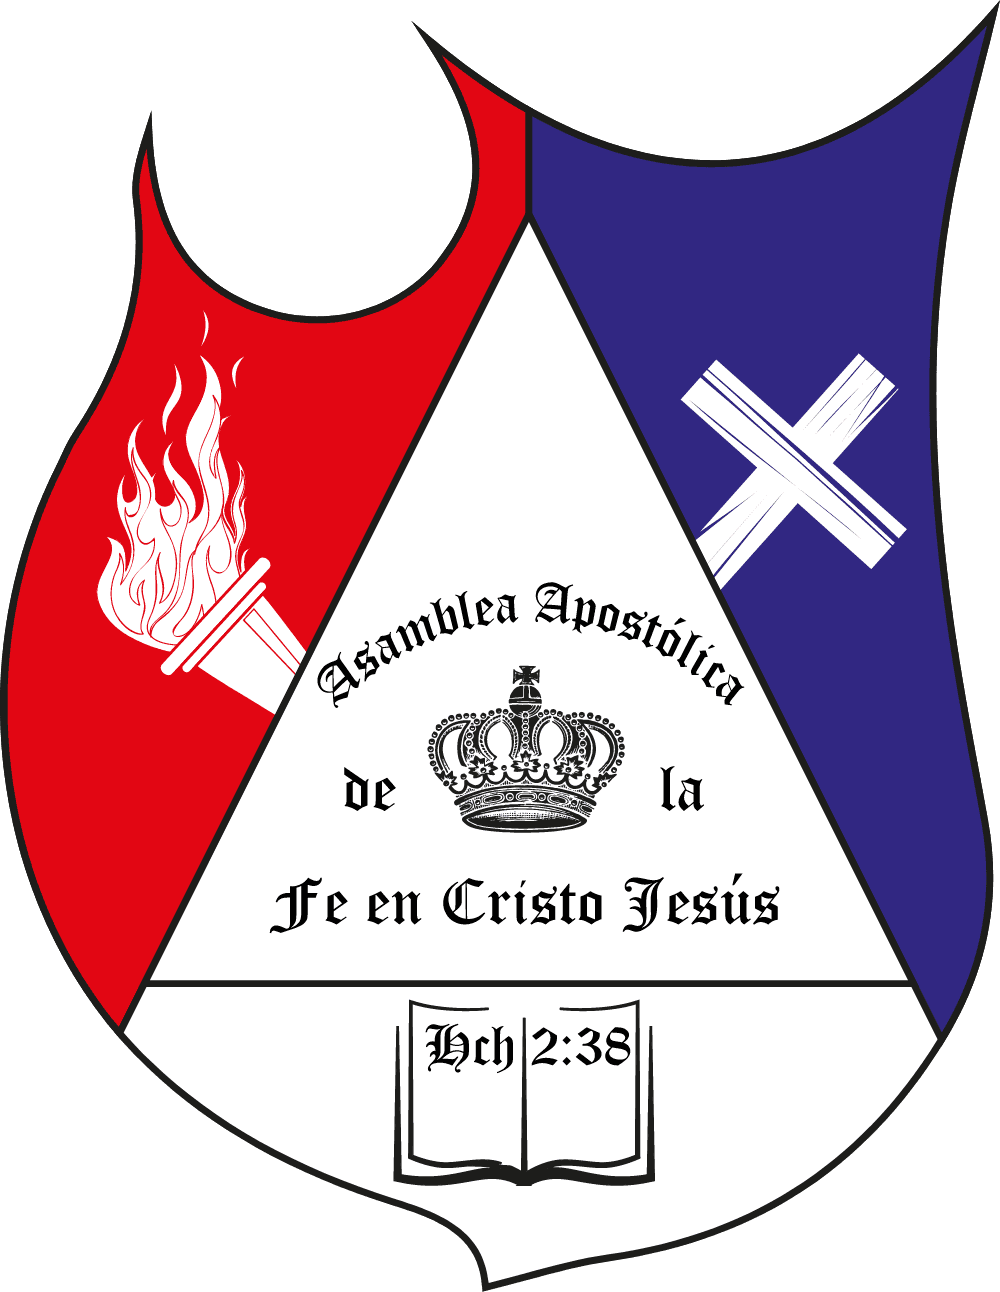 Asamblea Apostolica Logo download